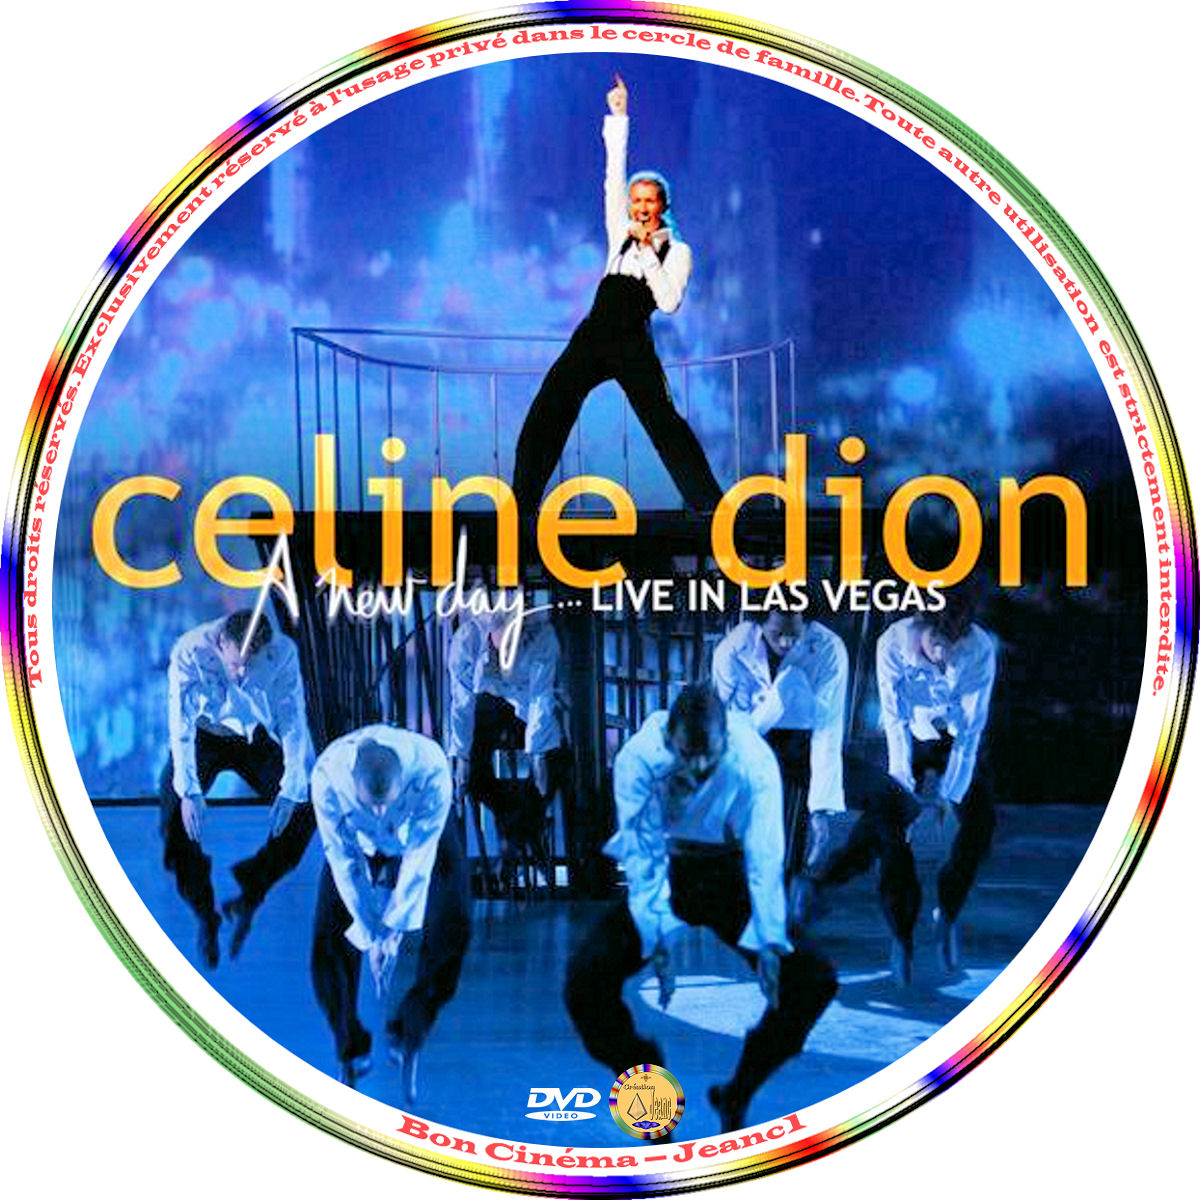 Celine Dion live in las vegas custom